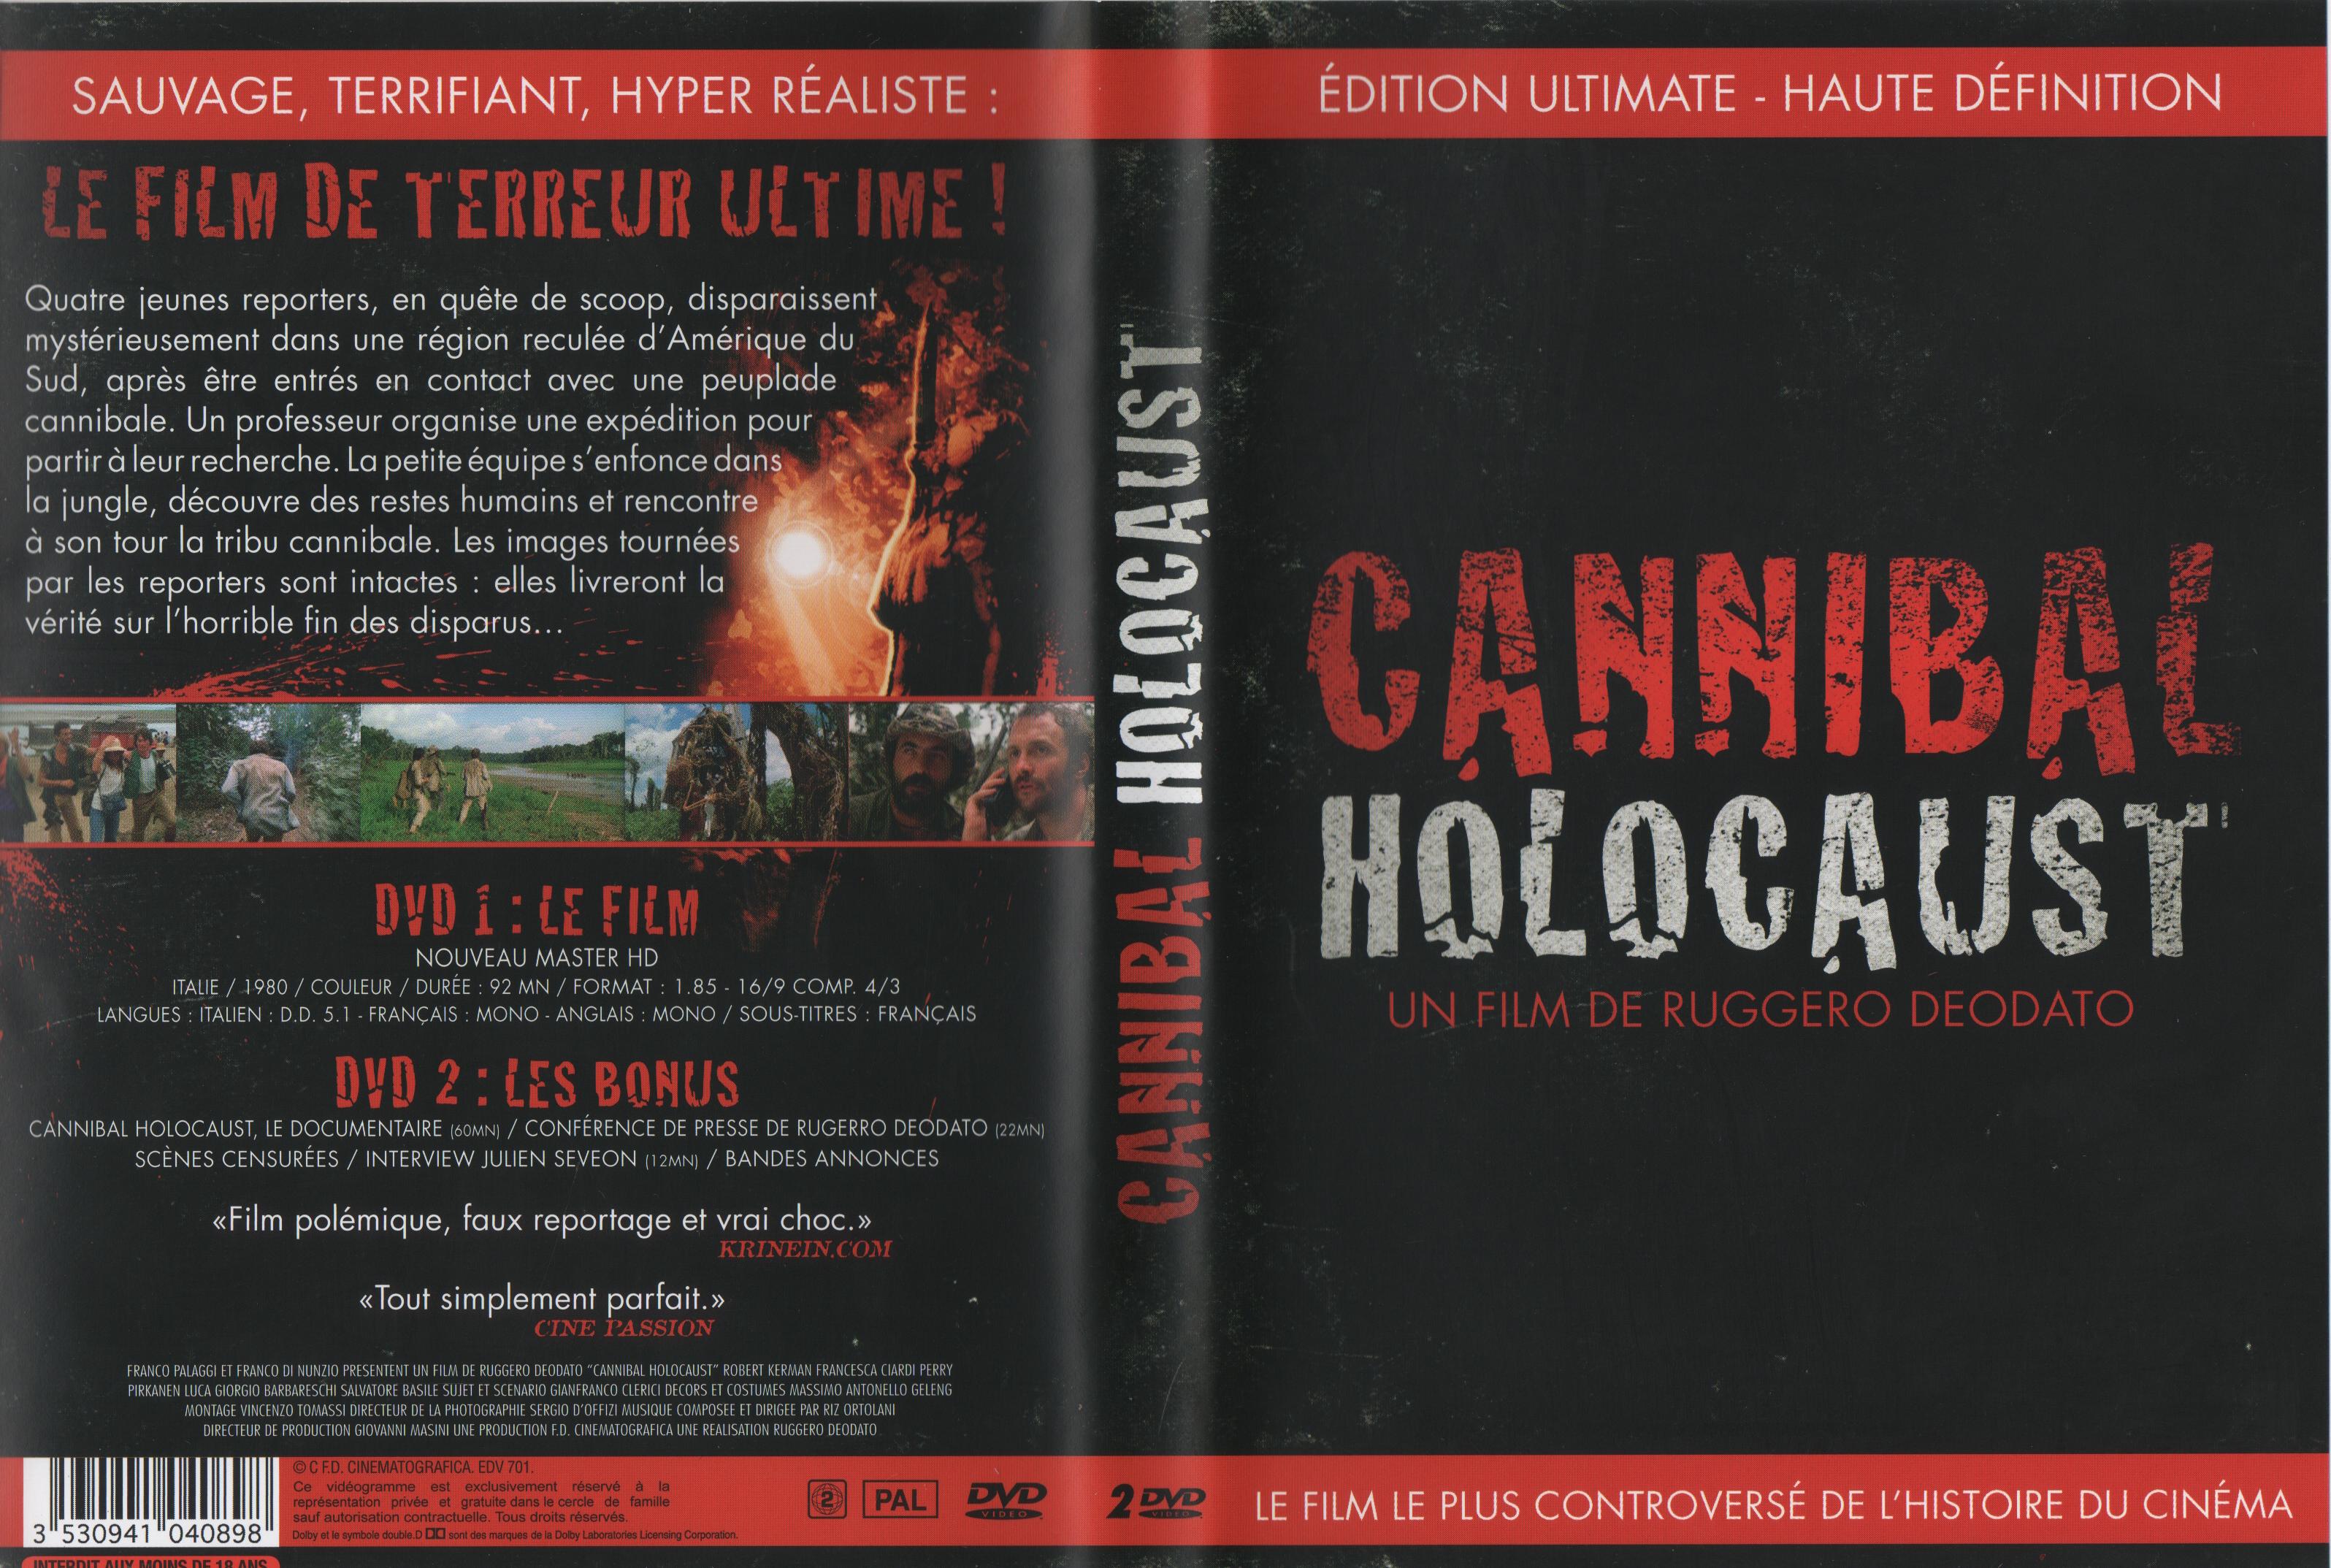 Jaquette DVD Cannibal holocaust v2